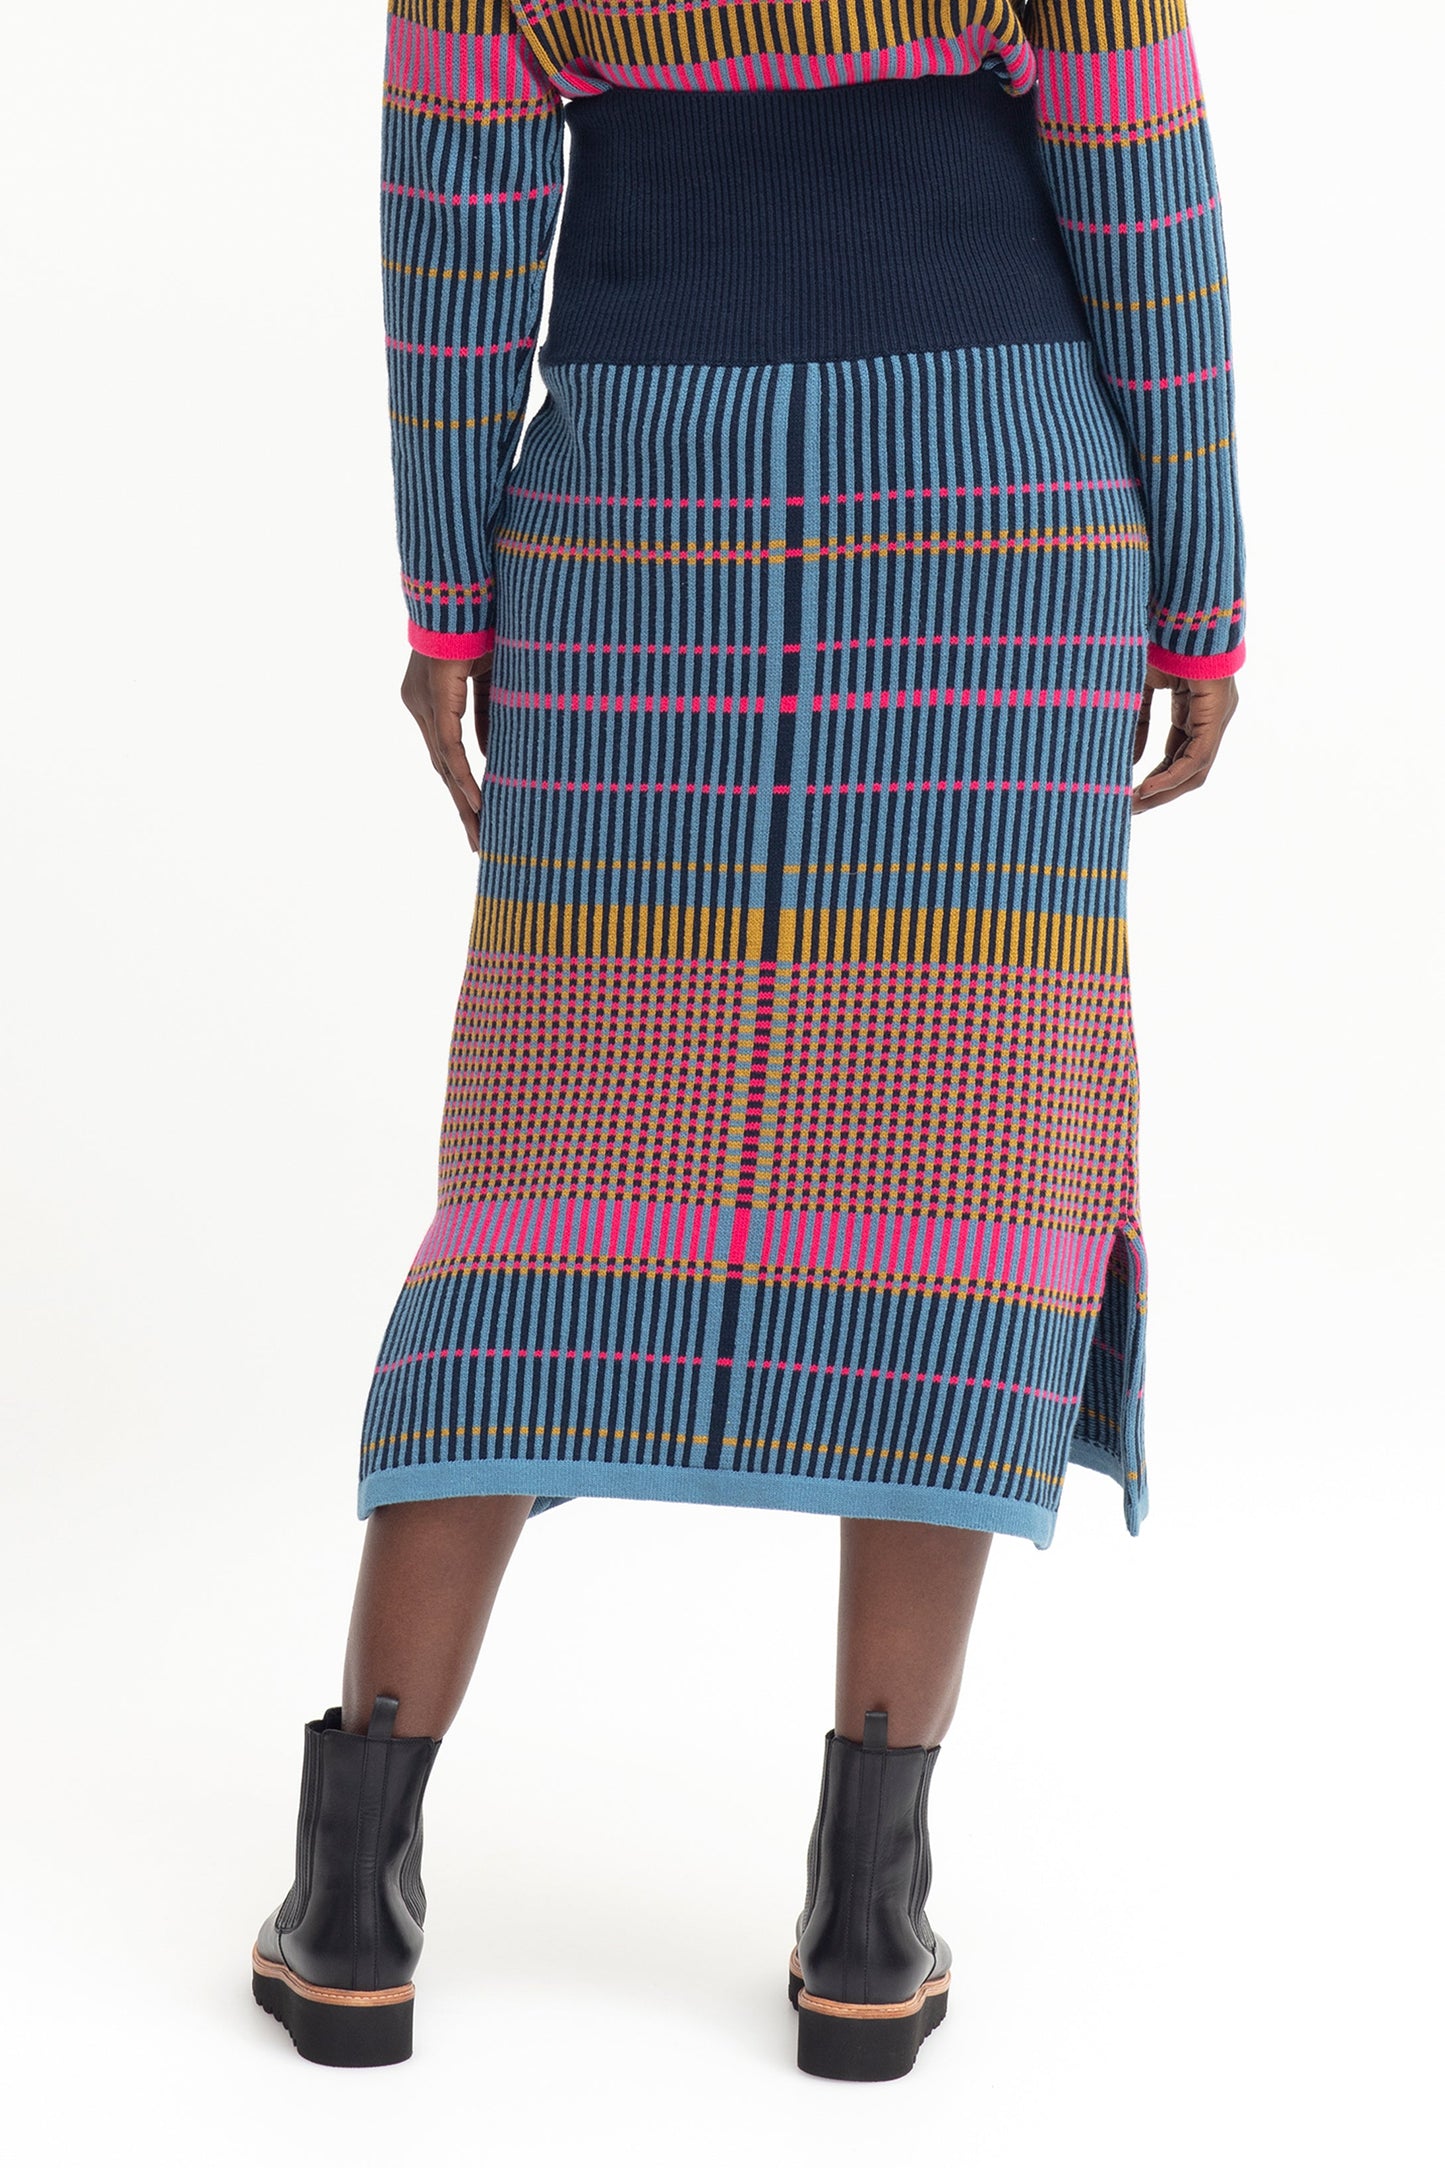 Cila Statement Multi Coloured Check Cotton Knit Midi Skirt Model Back | PINK MULTI